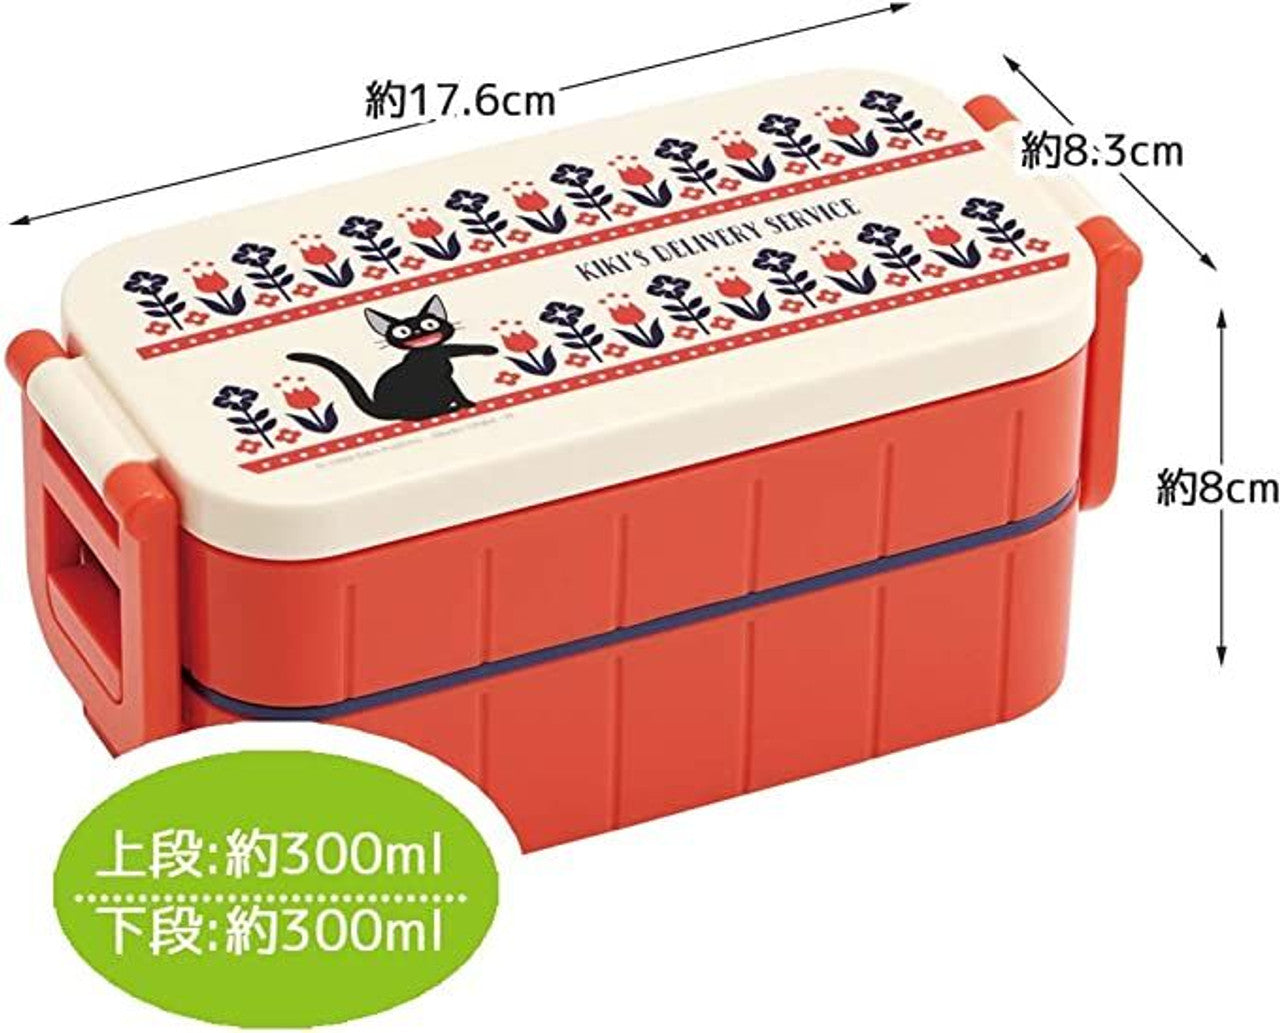 Kiki's Delivery Service Ghibli Lunch Box